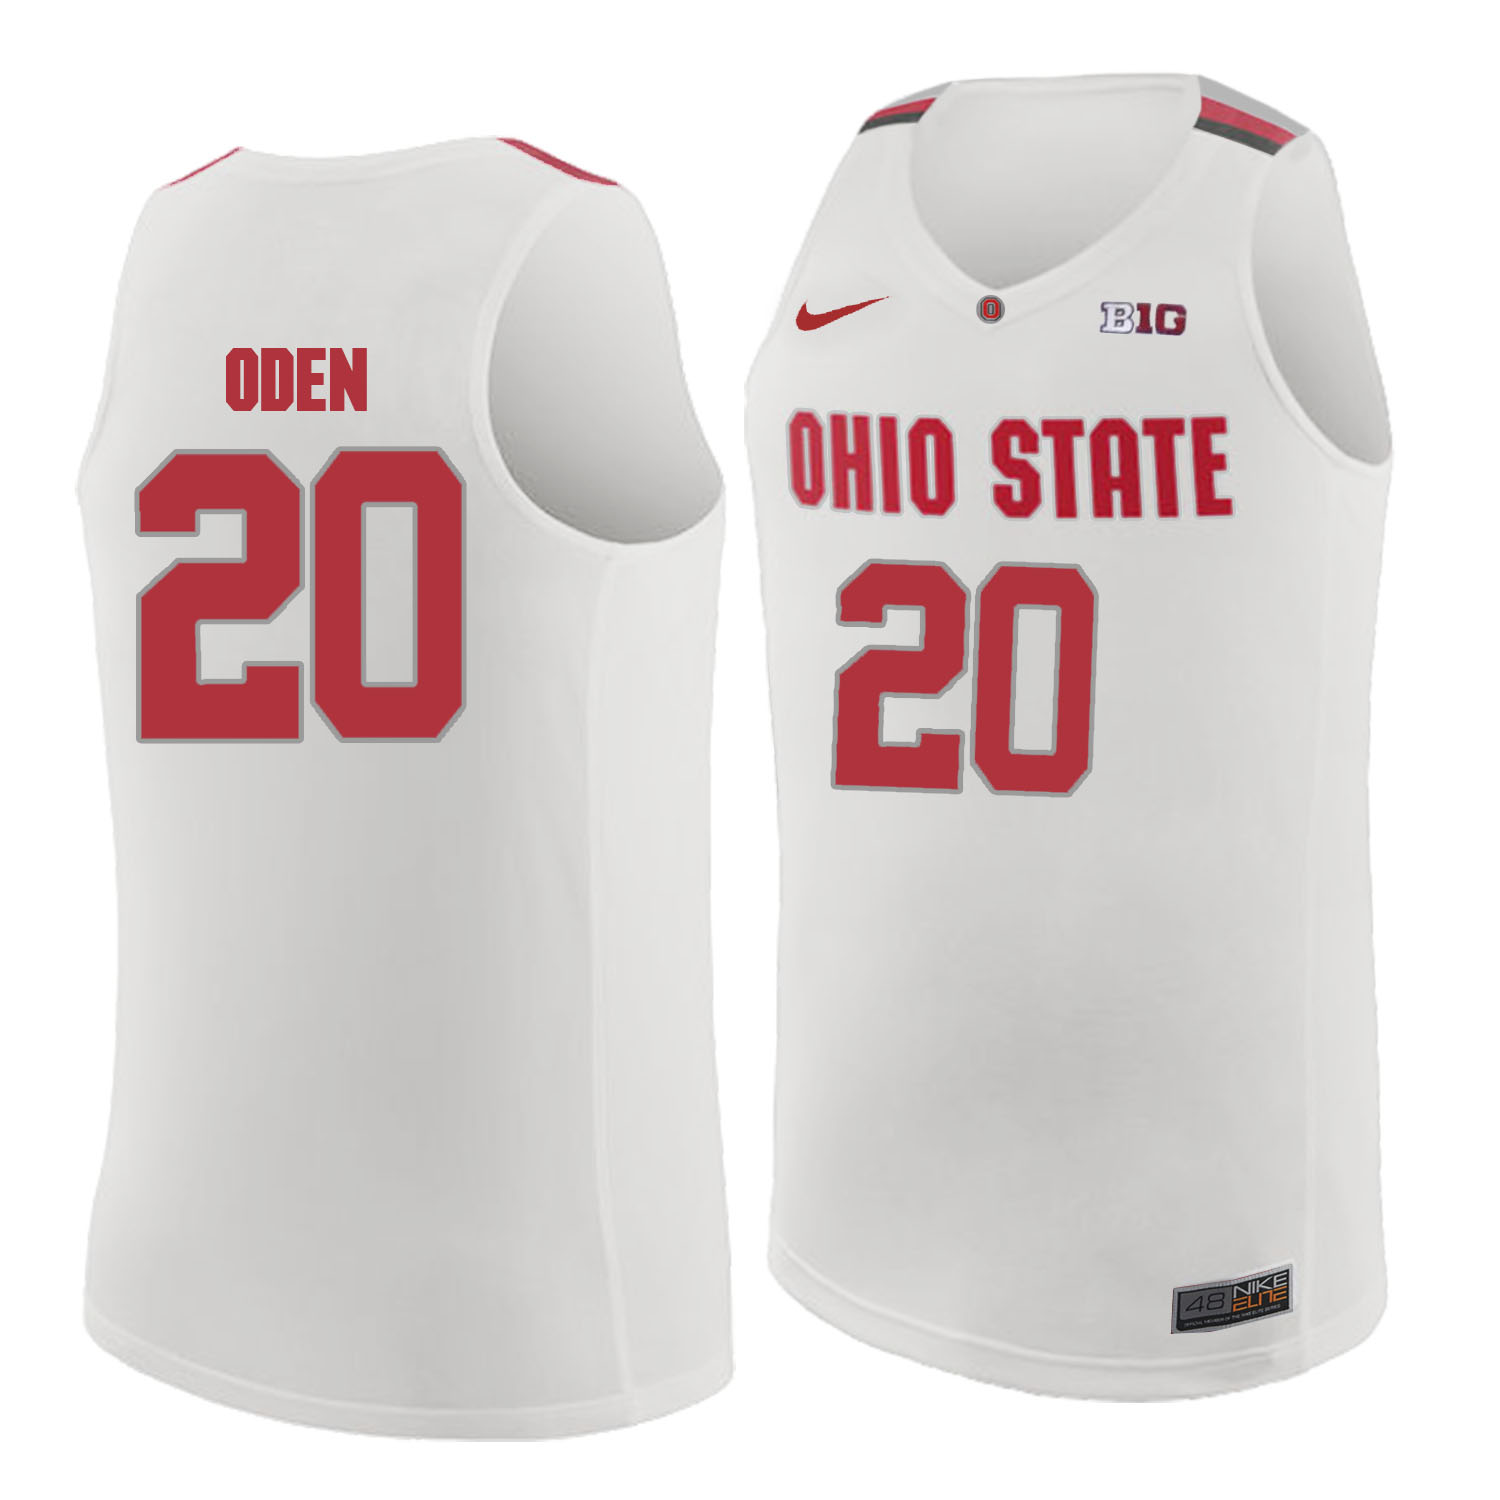 Ohio State Buckeyes 20 Greg Oden White College Basketball Jersey